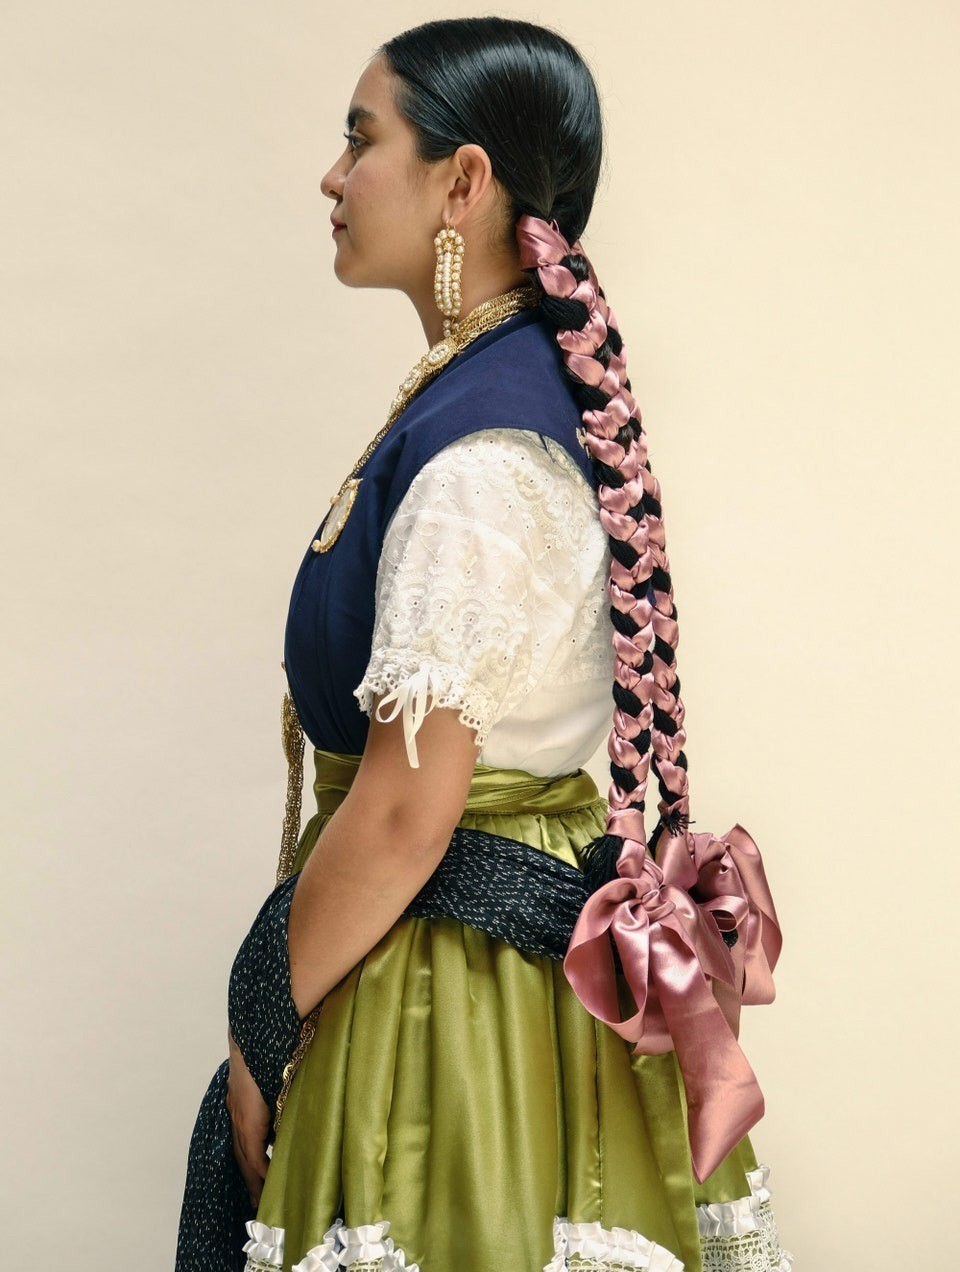 Guelaguetza hairstyles by Netzahualxochitl Huerta featured in Vogue México shot by Luvia Lazo 